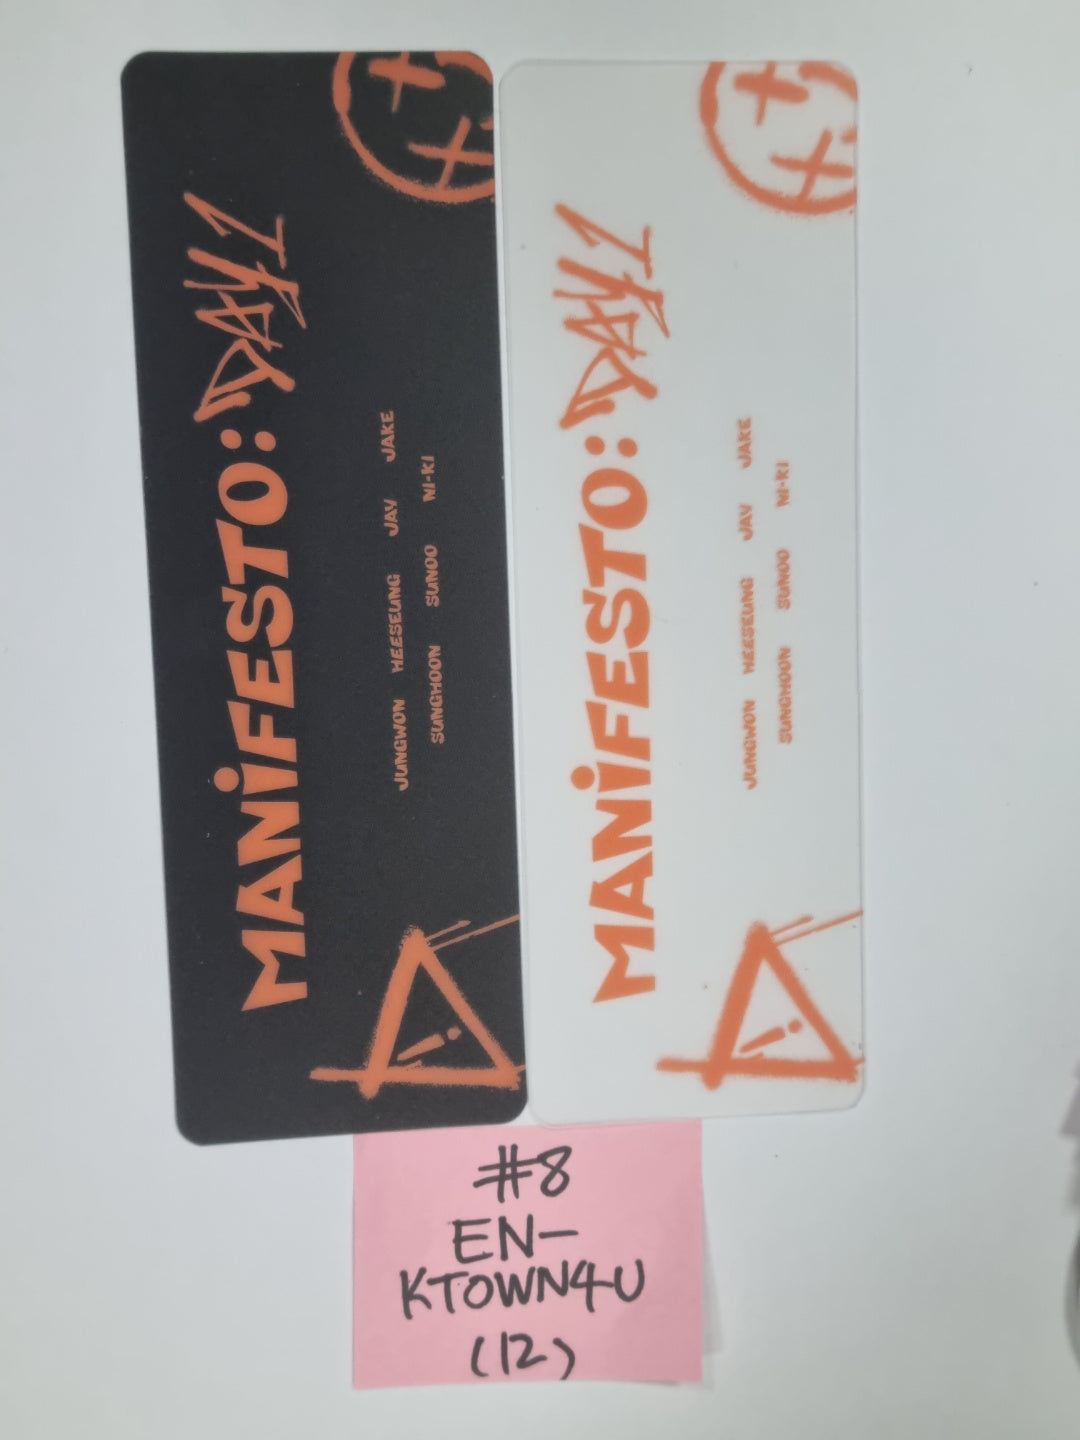 ENHYPEN "MANIFESTO : DAY 1" - Ktown4U 예약판매 혜택 포토카드, 북마크